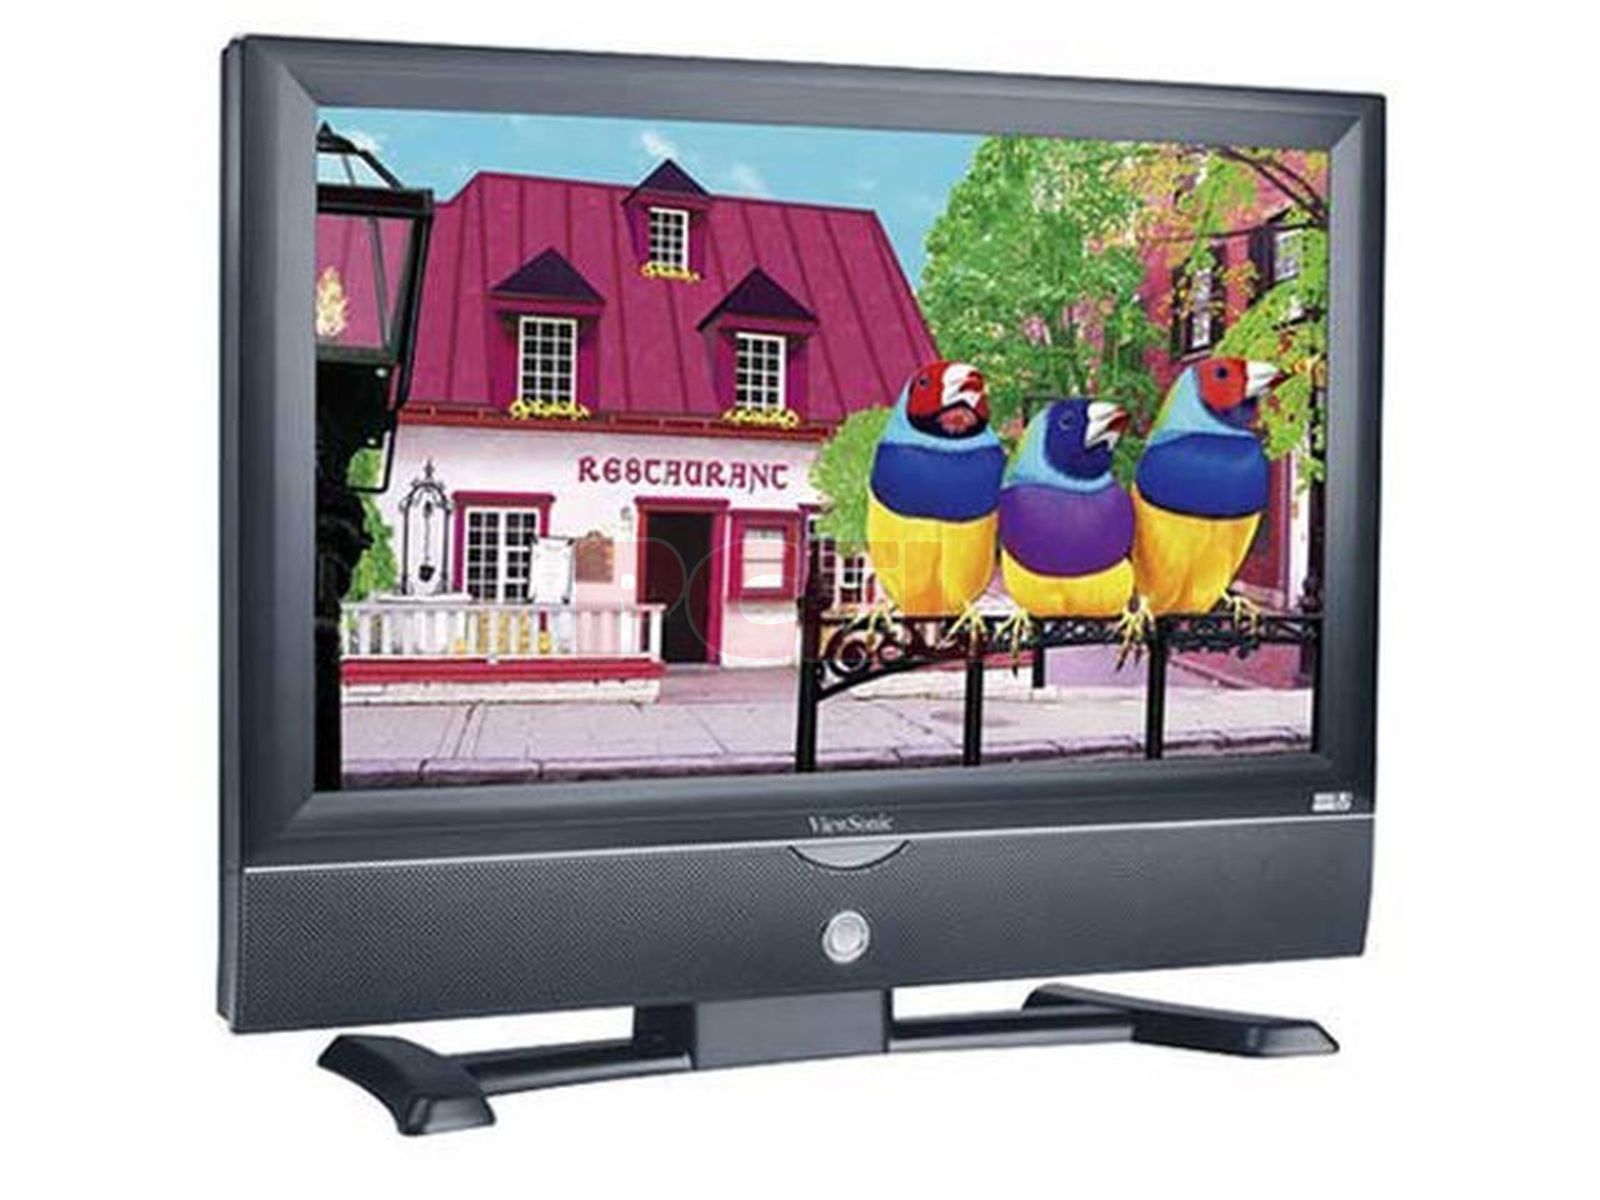  Viewsonic N2635W 26 pulgadas 720p LCD HDTV : Electrónica